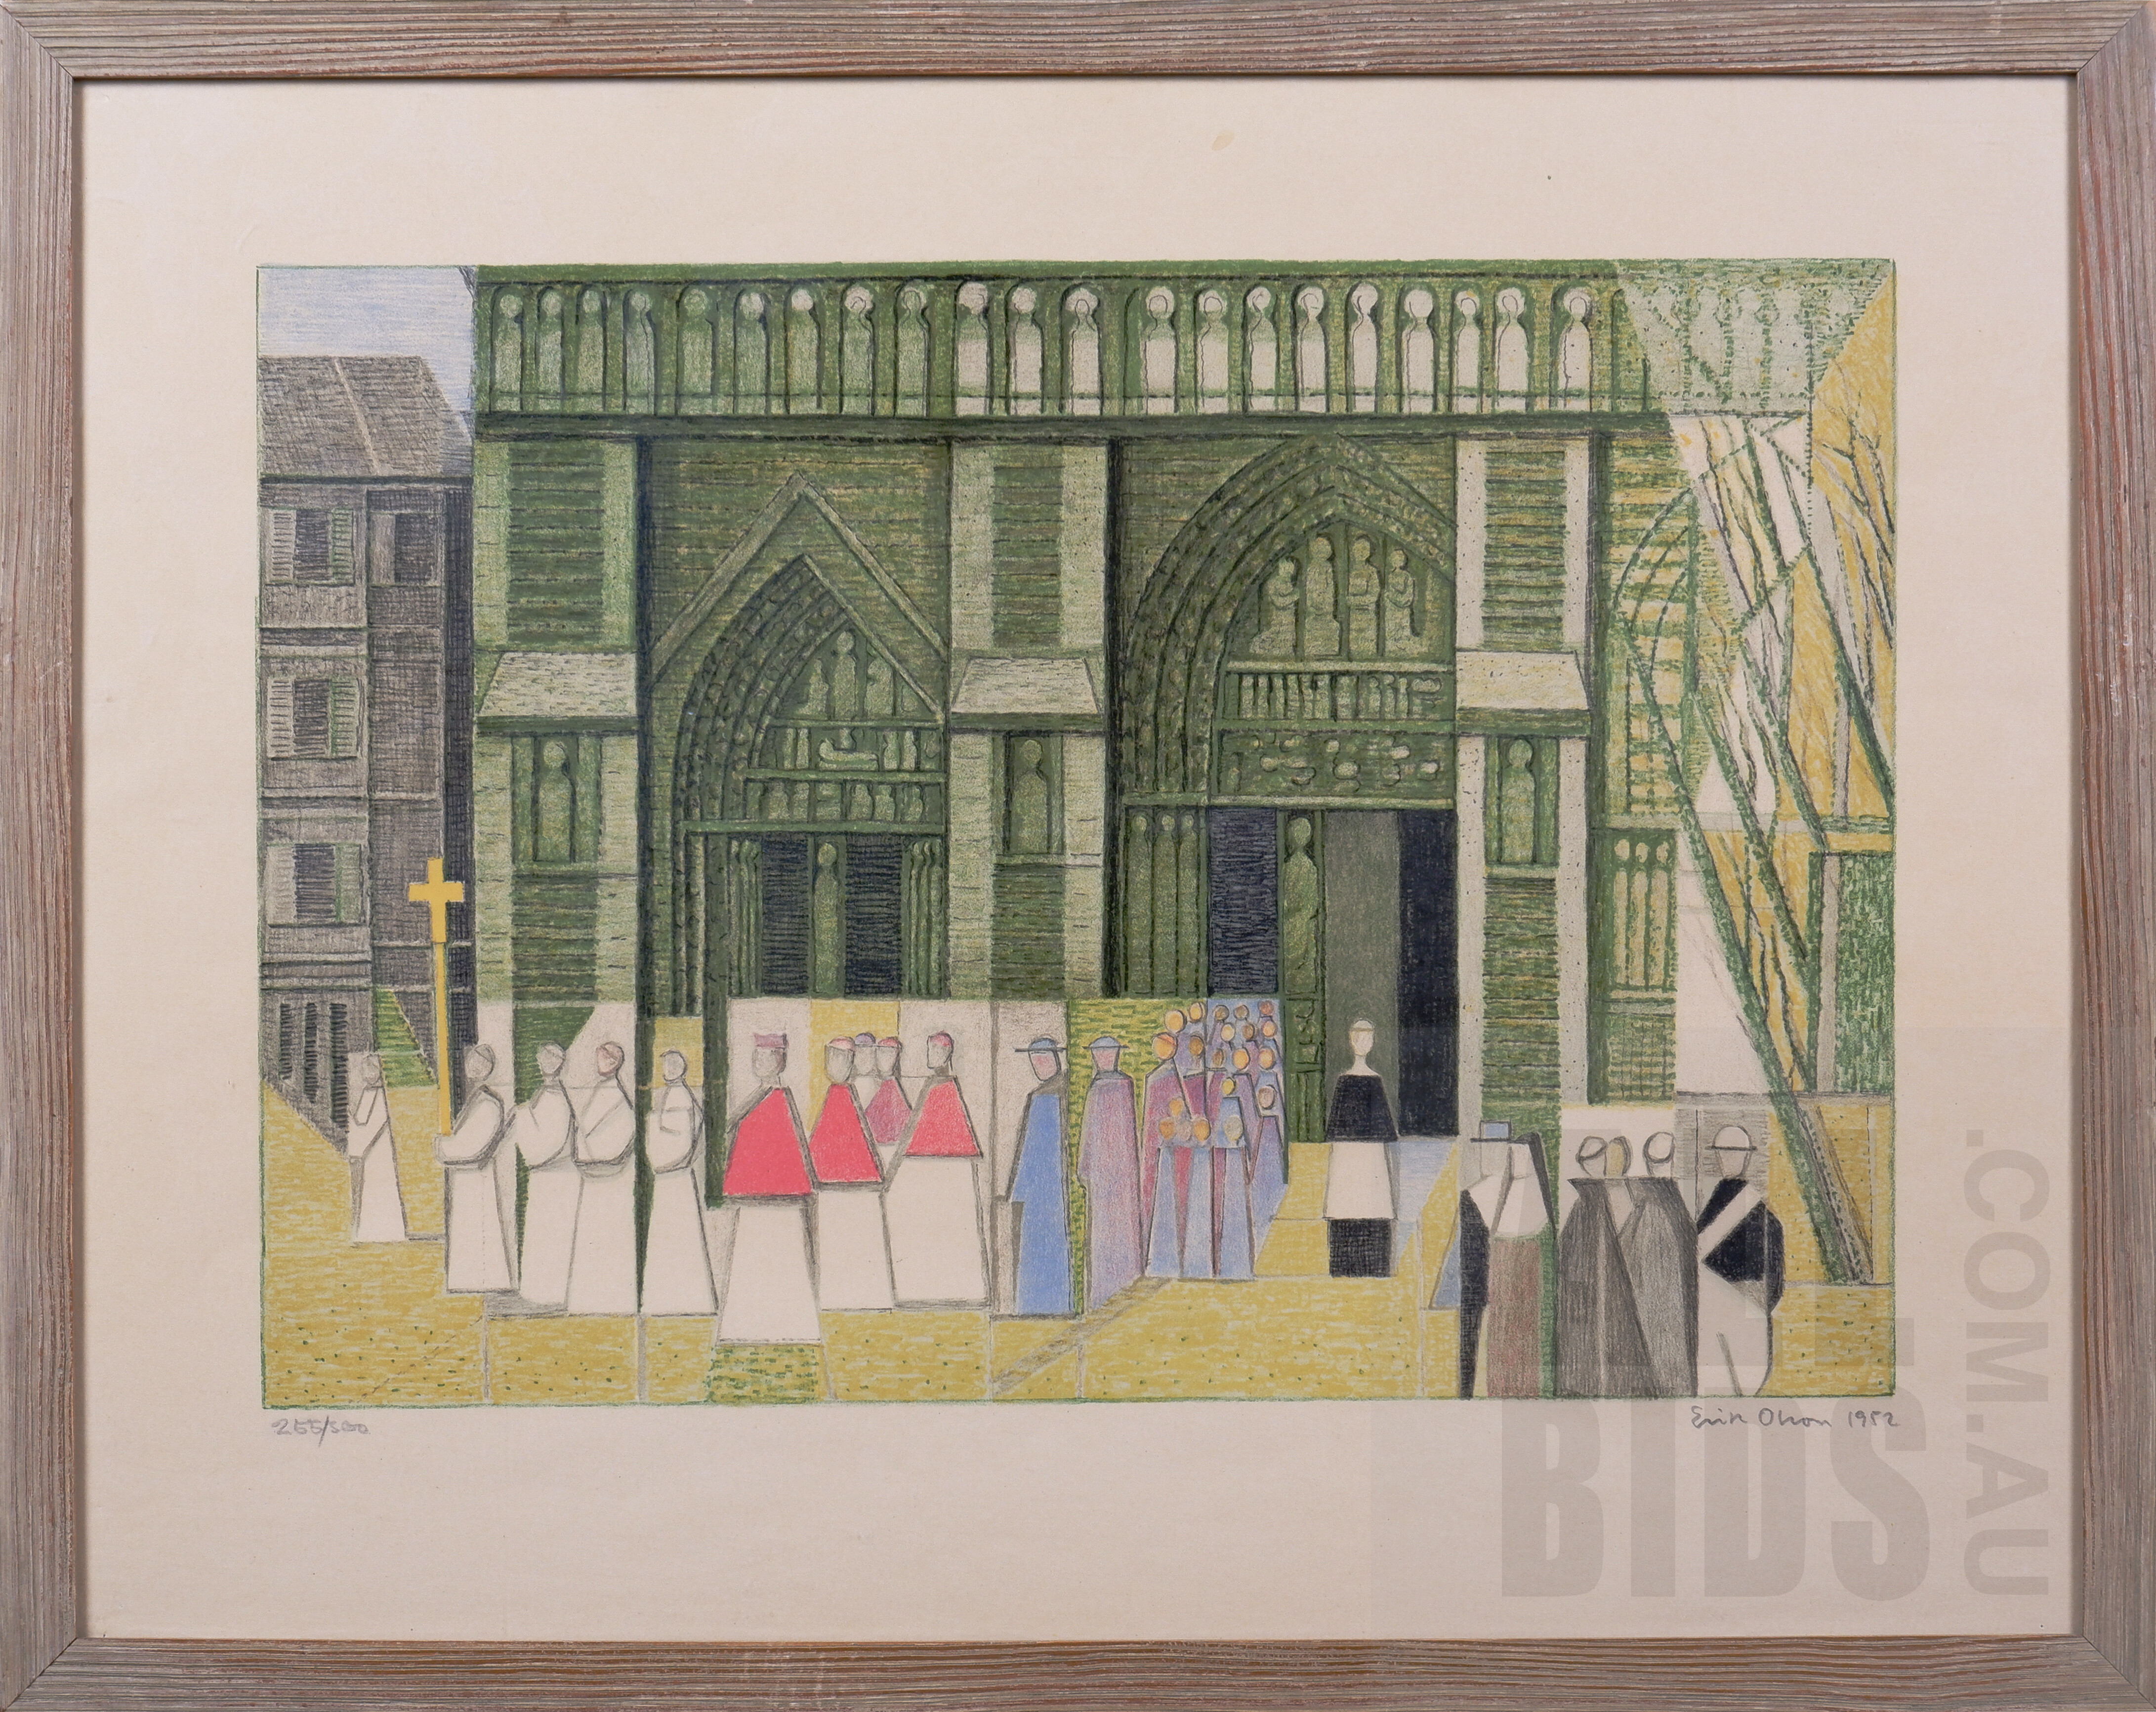 'Erik Olson (1901-1986, Swedish - Halmstad Group), Church Procession 1952, Colour Lithograph, 42 x 54 cm (incl. frame)'